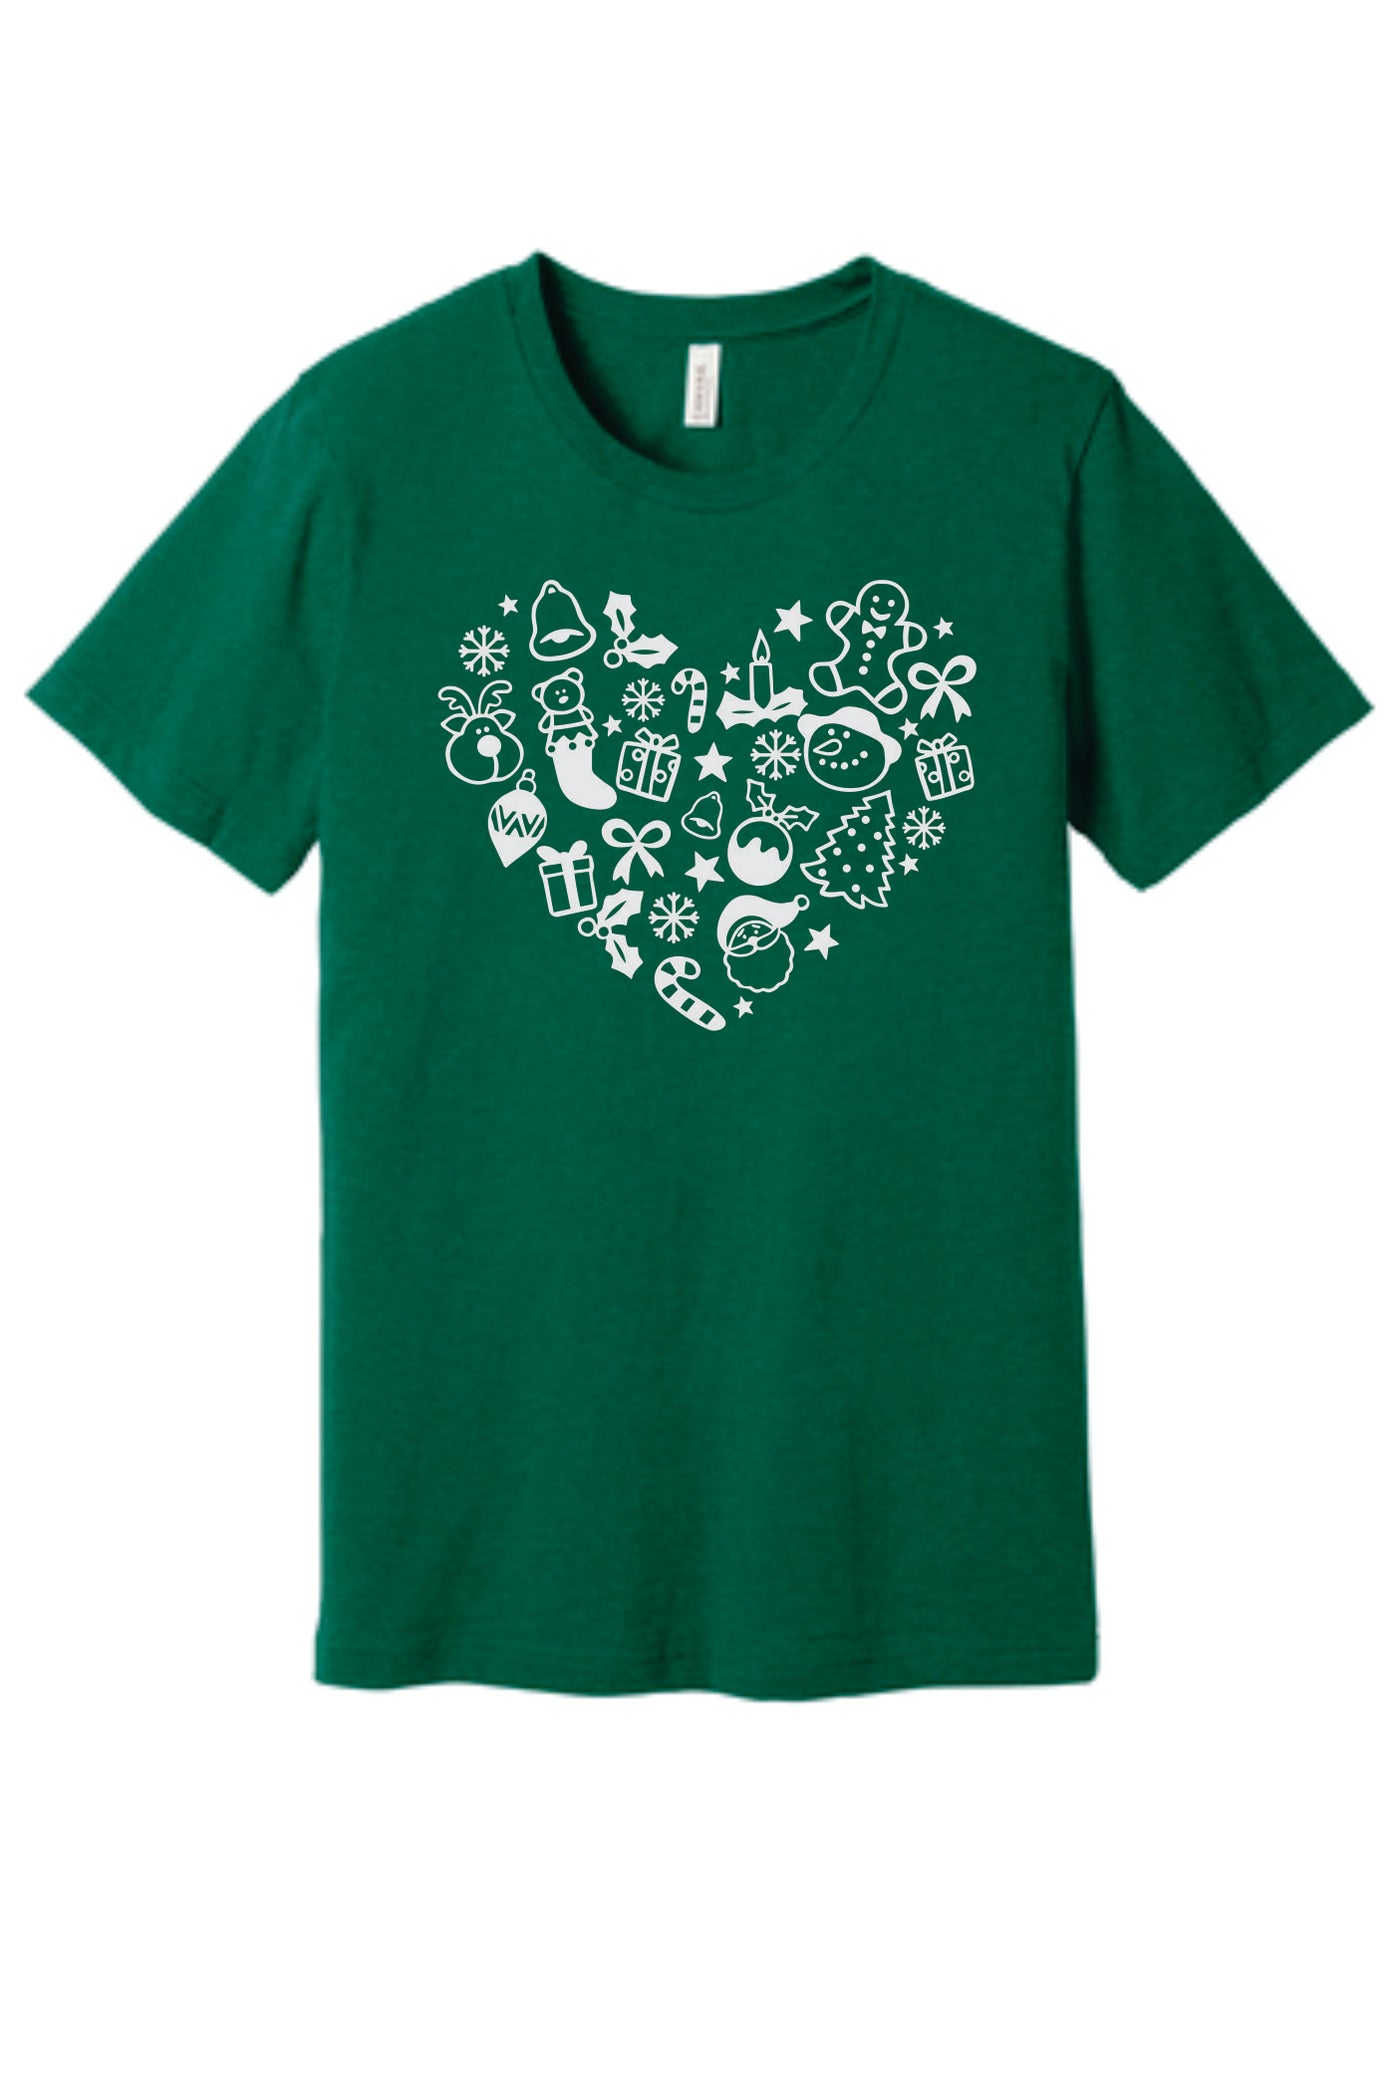 Christmas Heart Short Sleeve T-shirt